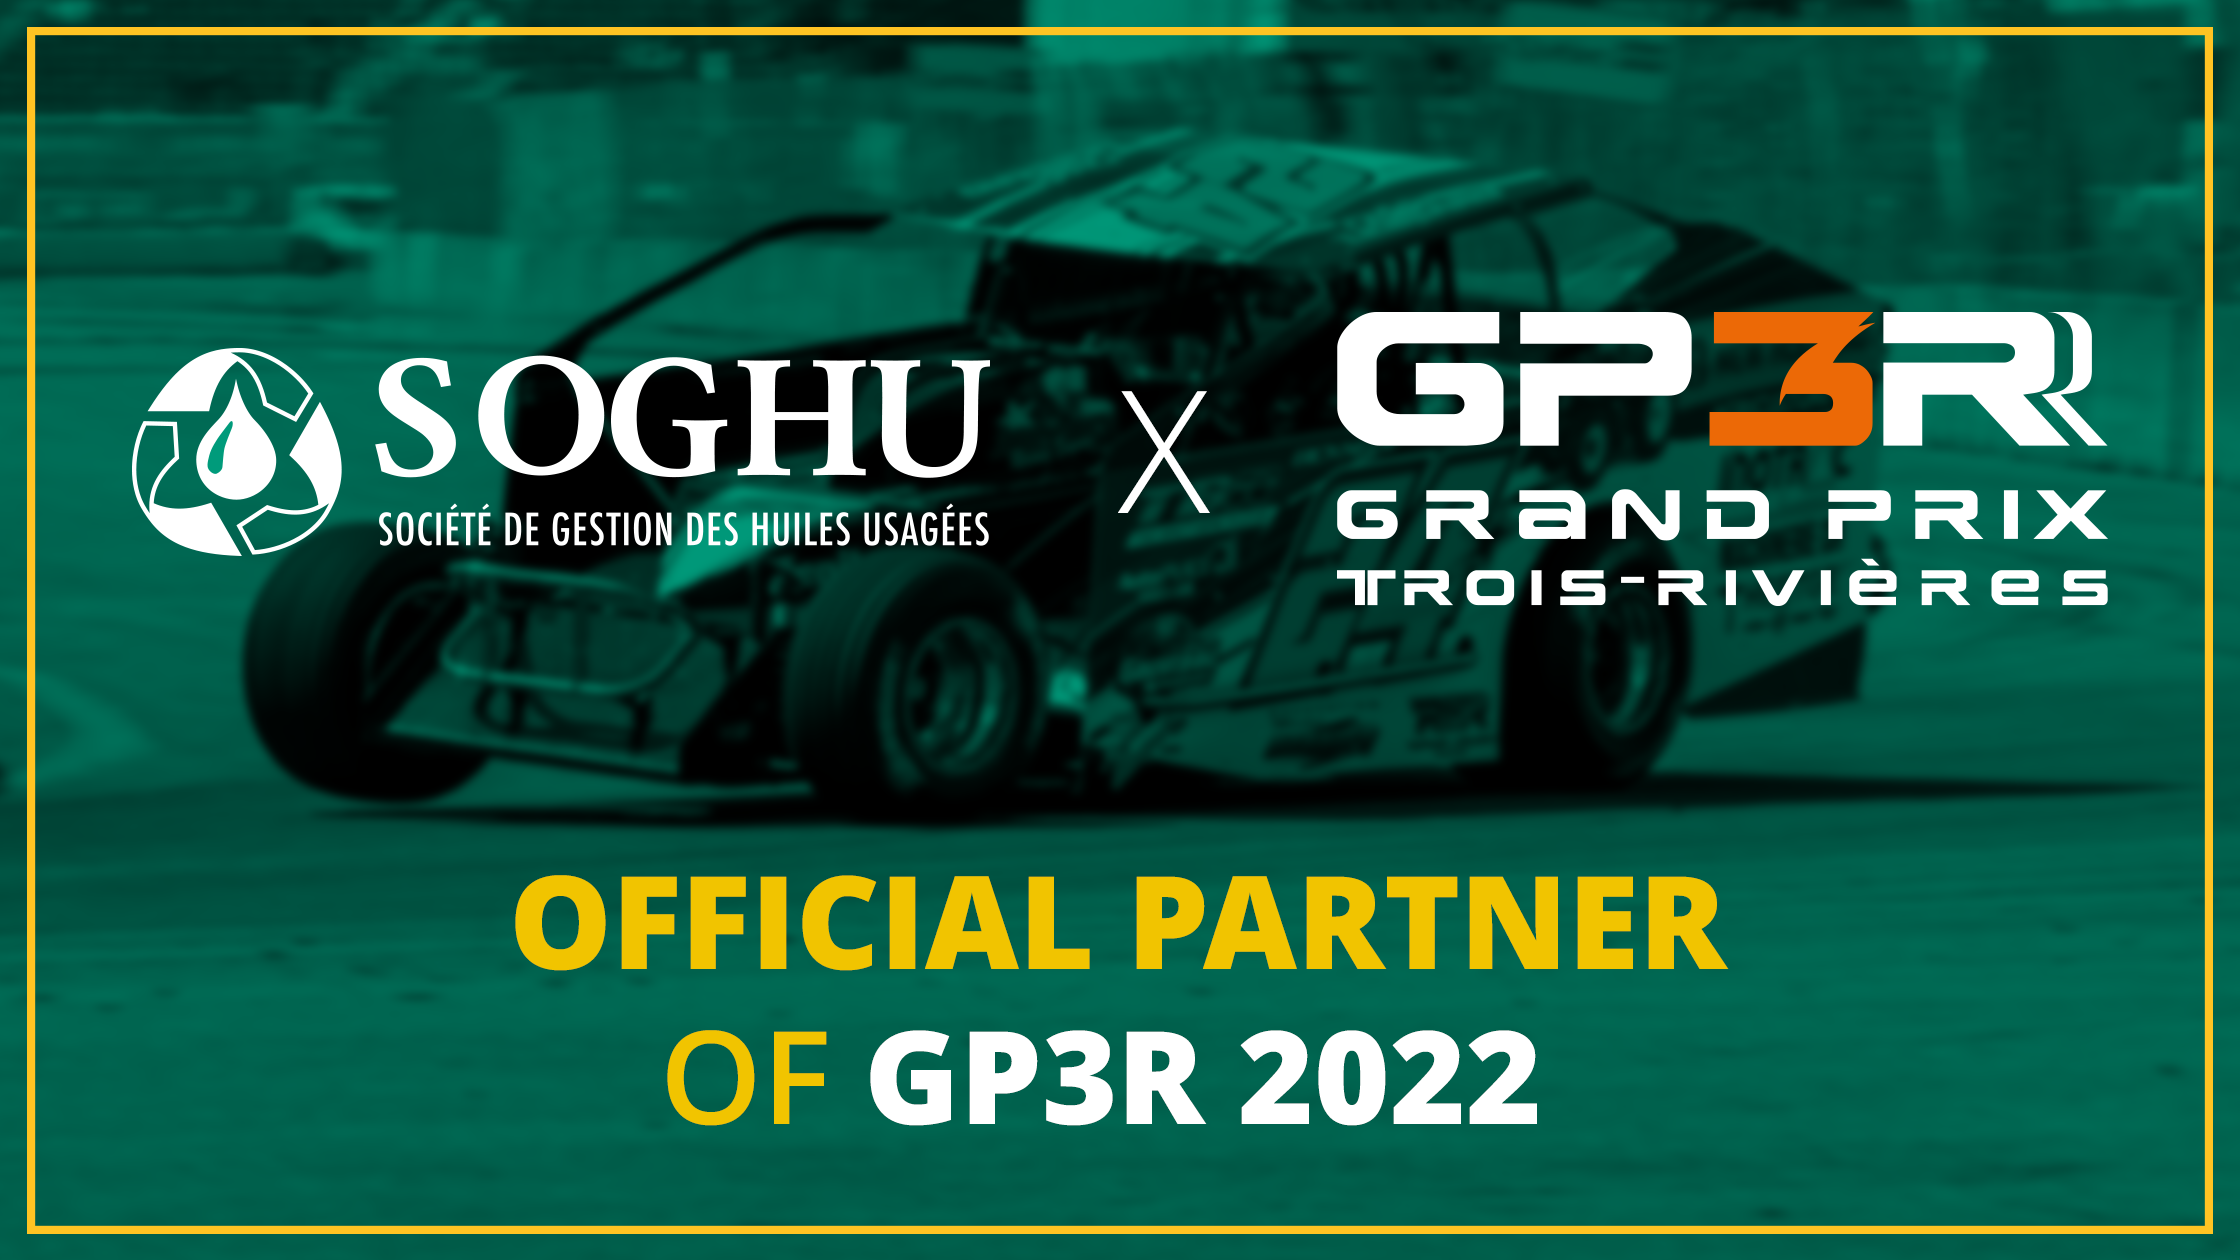 SOGHU, official partner of GP3R 2022